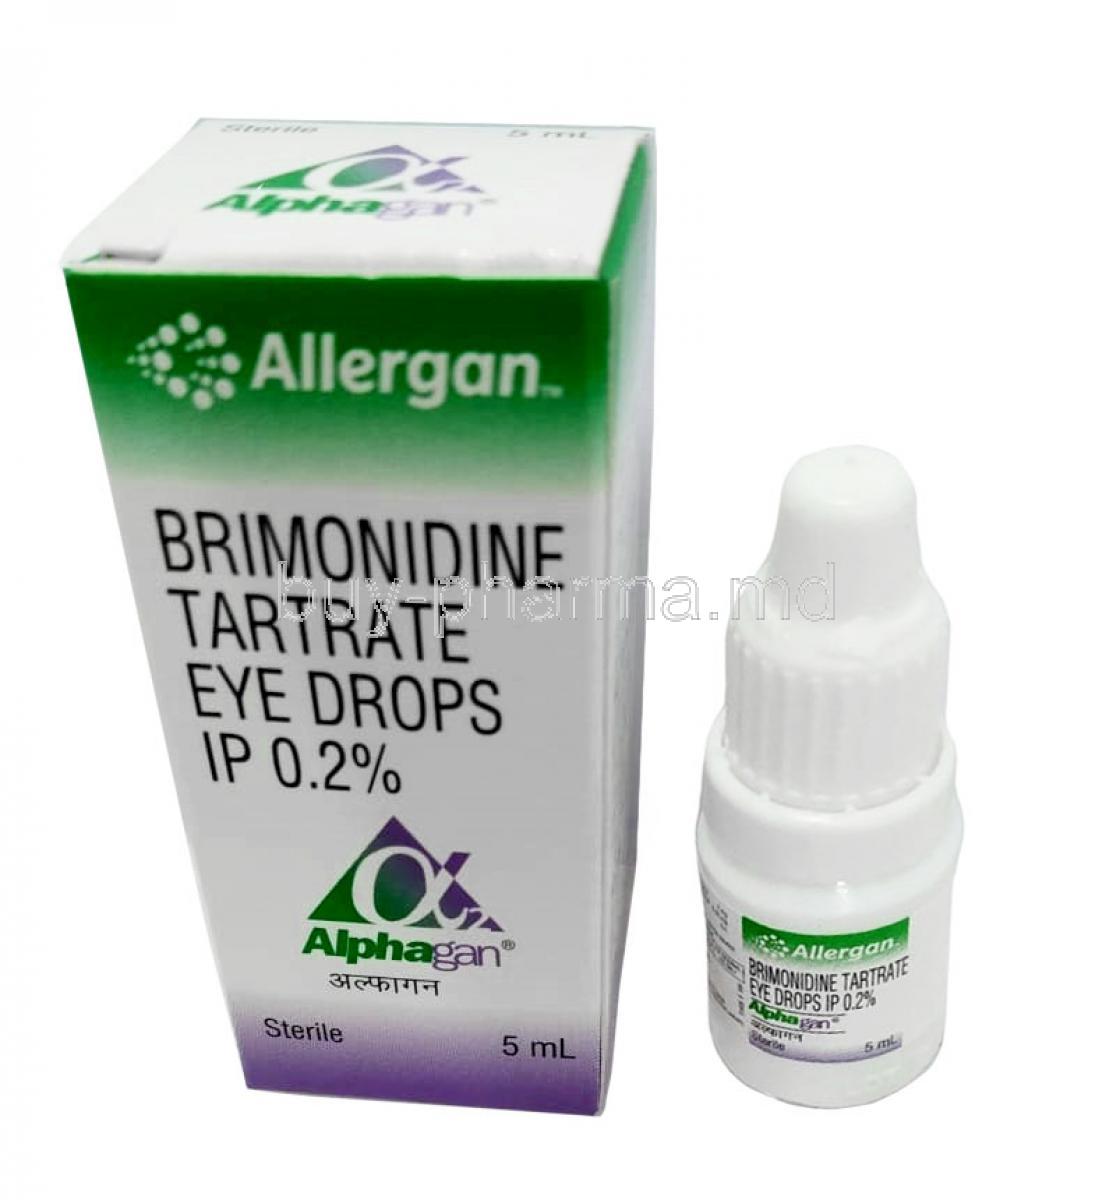 Alphagan Eye Drop, Brimonidine 0.2% w/v, Eye Drops 5mL, Allergan India Pvt Ltd, Box, Bottle